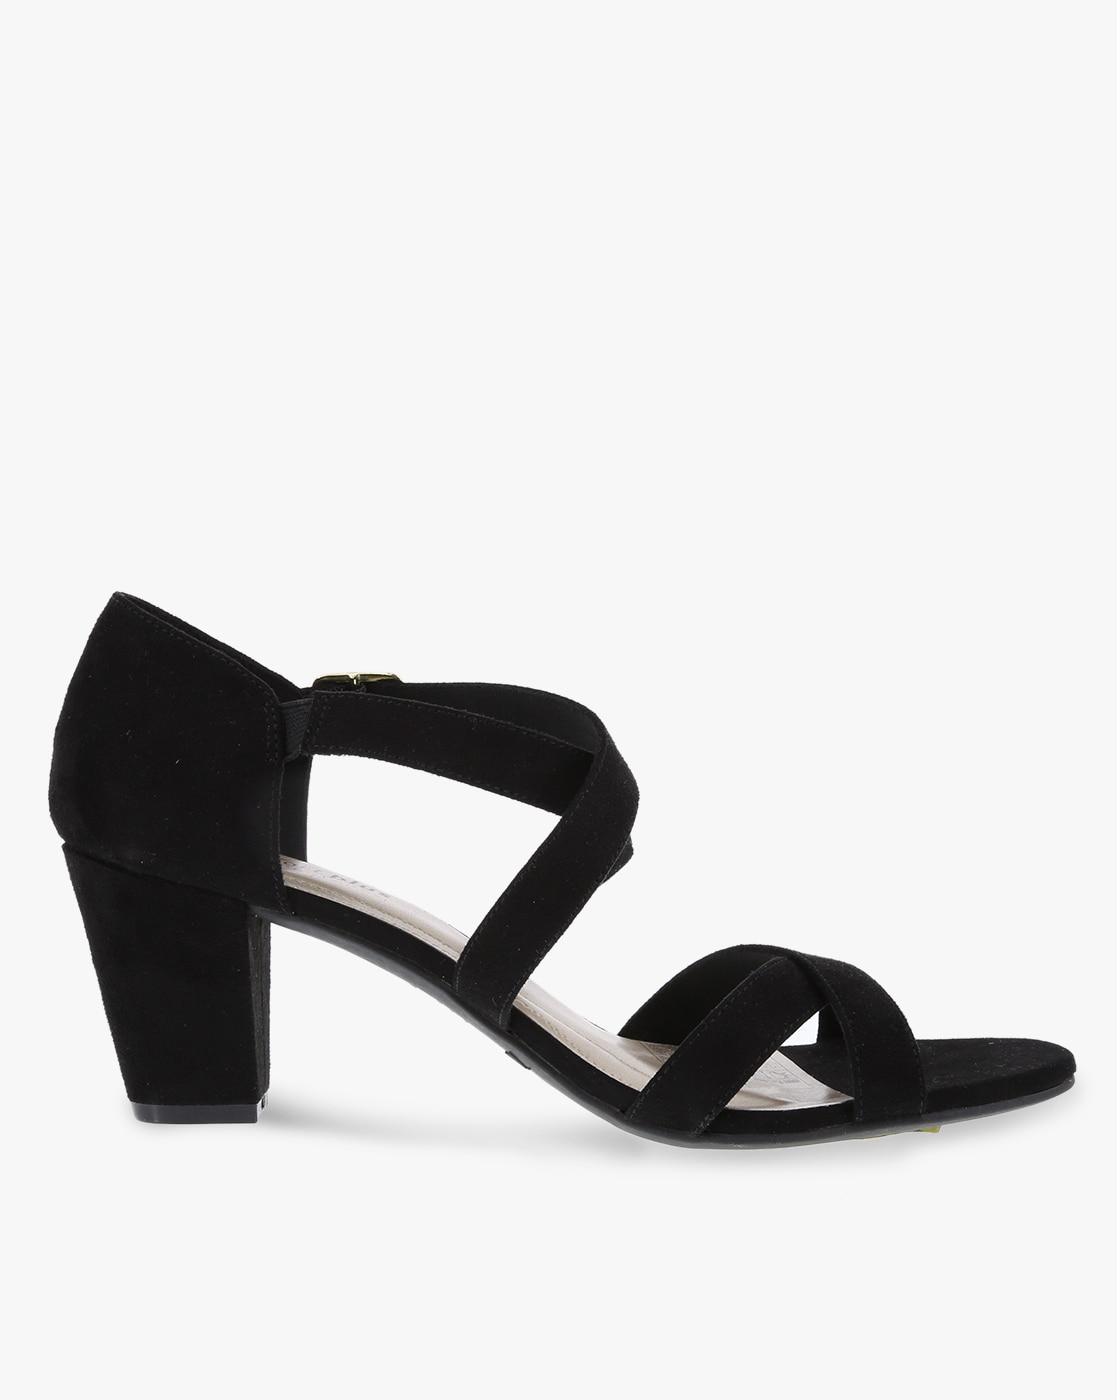 black heels with criss cross straps